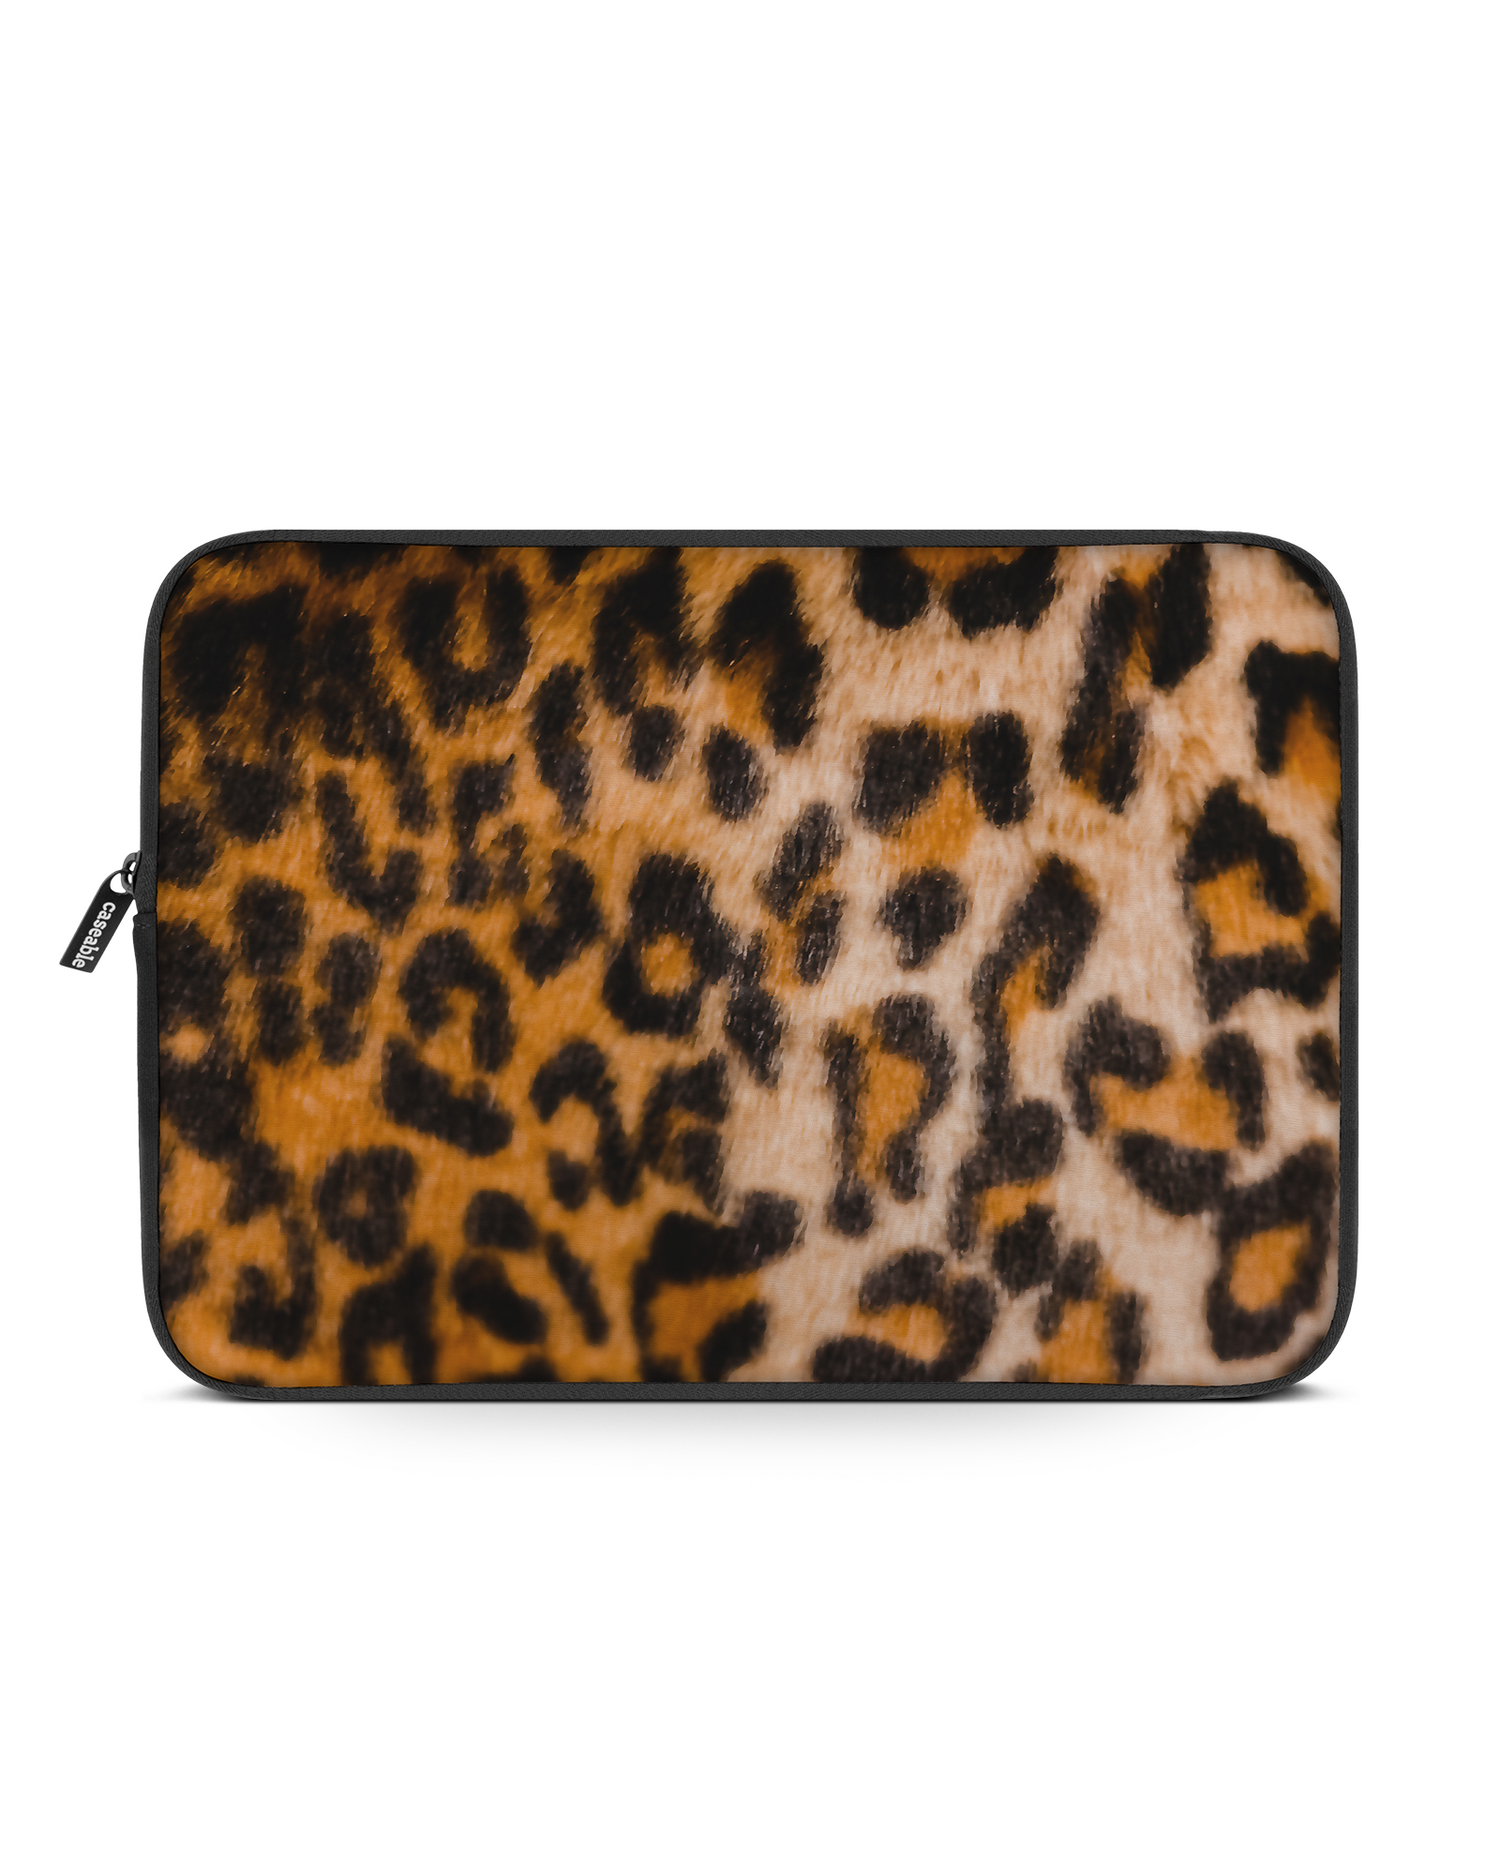 Leopard Pattern Laptop Case 16 inch: Front View